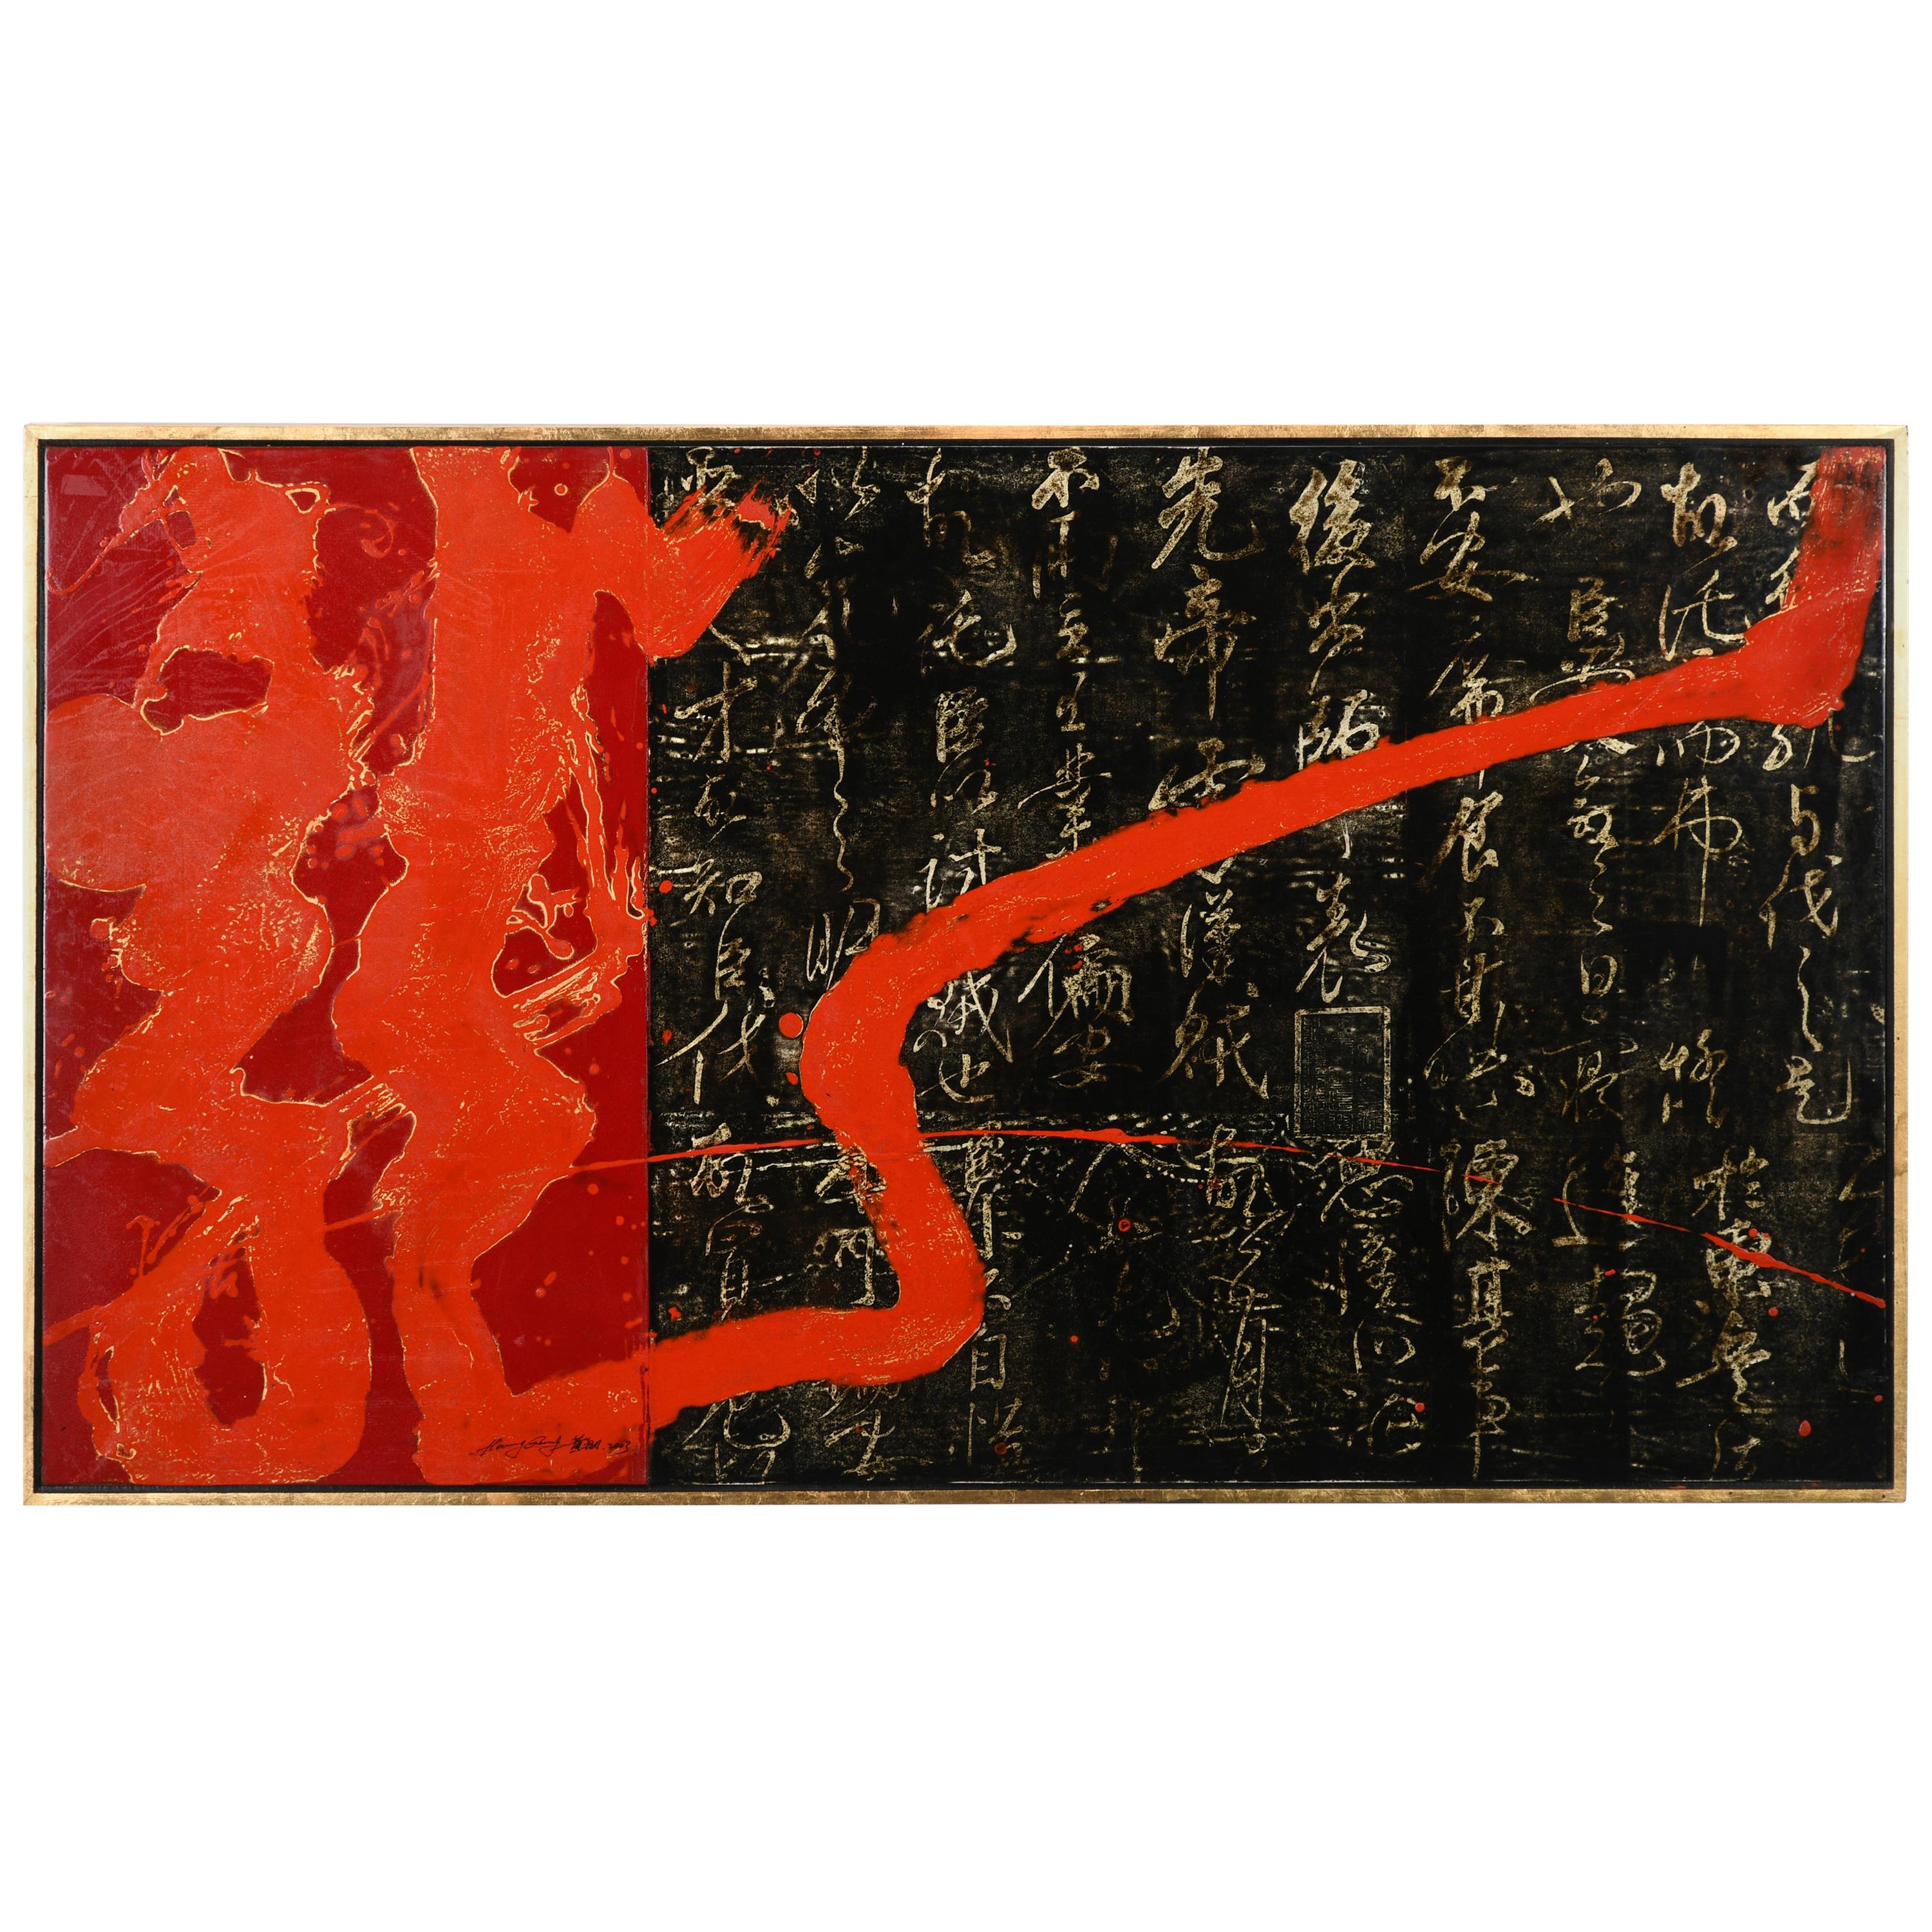 Peinture moderniste chinoise signée Huang Gang, 2003